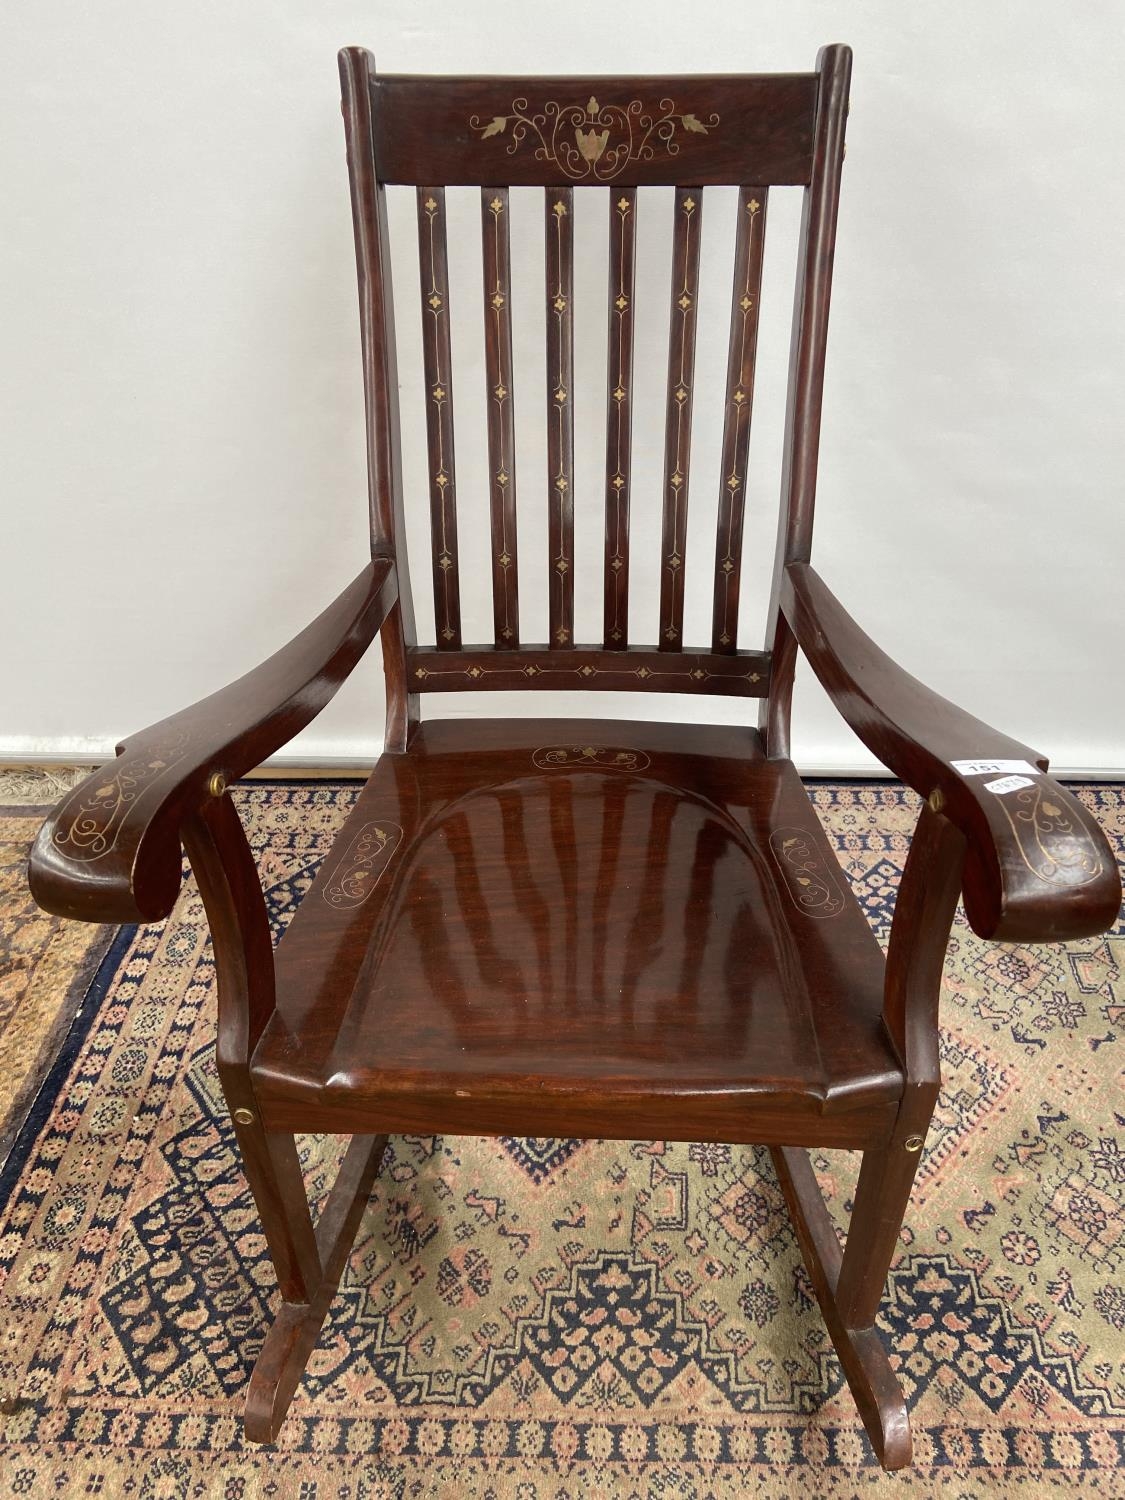 A Hardwood and brass inlaid rocking arm chair. [80x50x40cm] Originally from Saudi Arabia. - Image 3 of 3